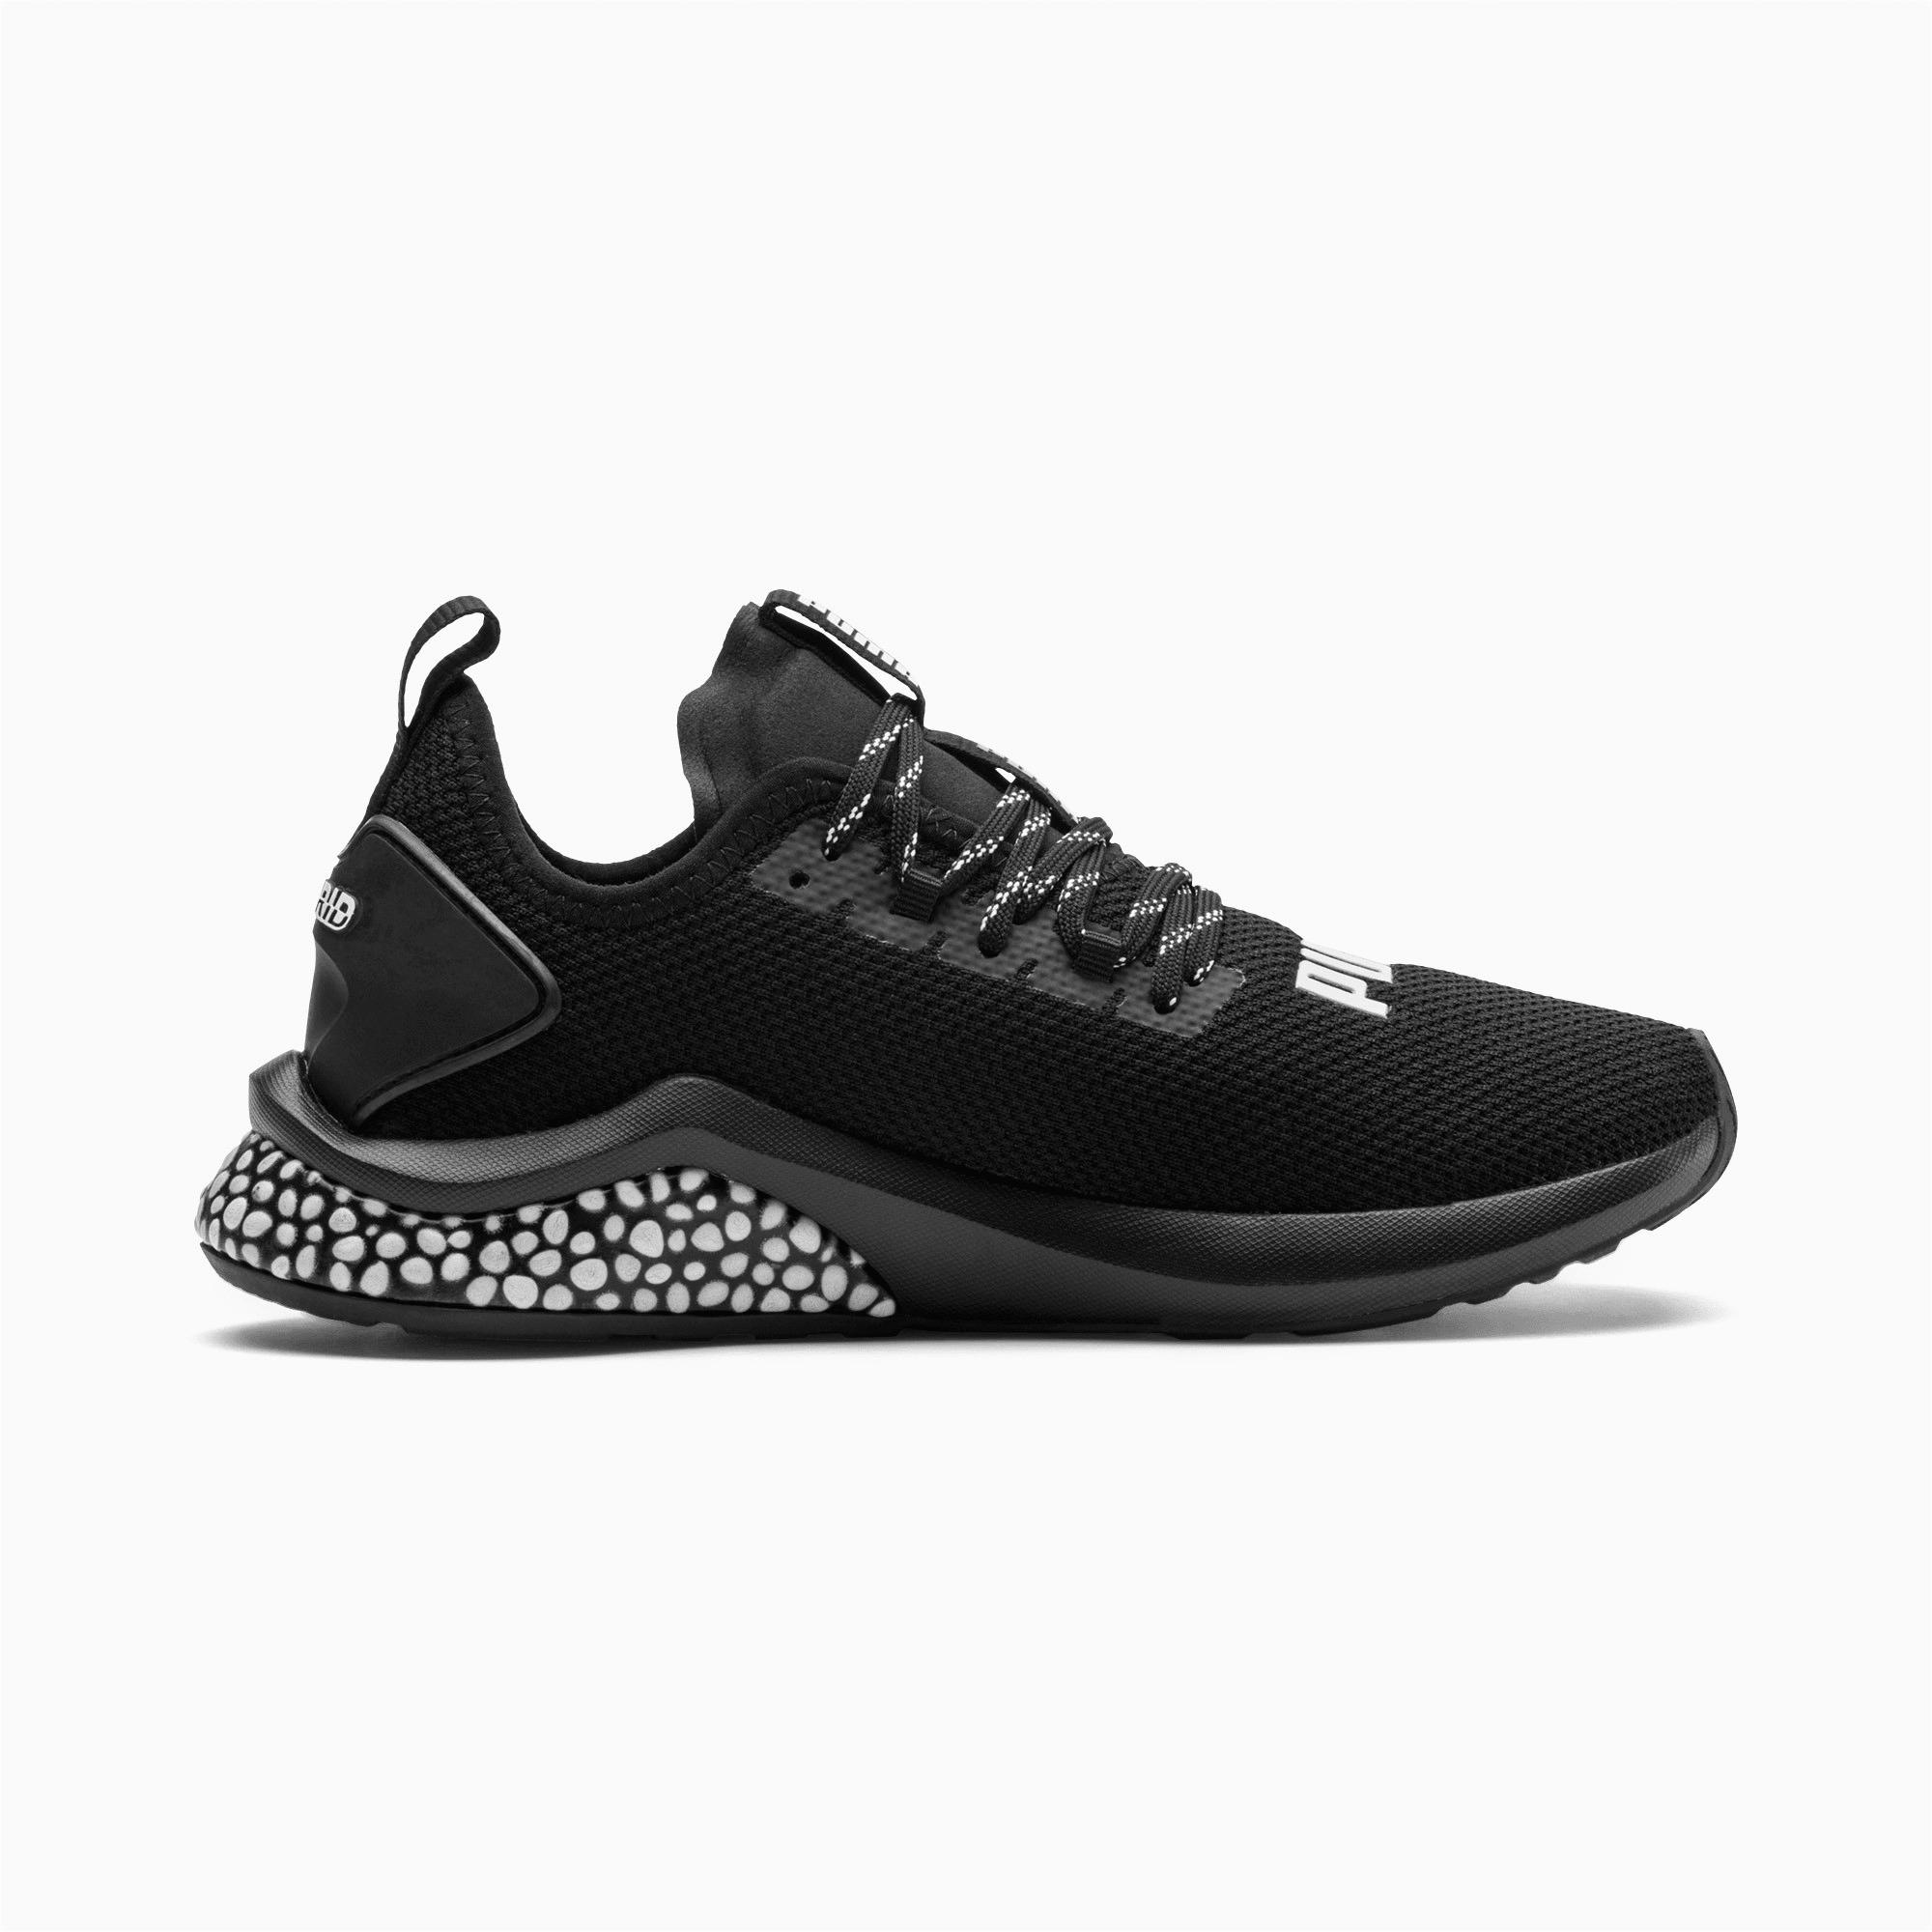 PUMA Rubber Hybrid Nx Women's Running Shoes in Black - Lyst